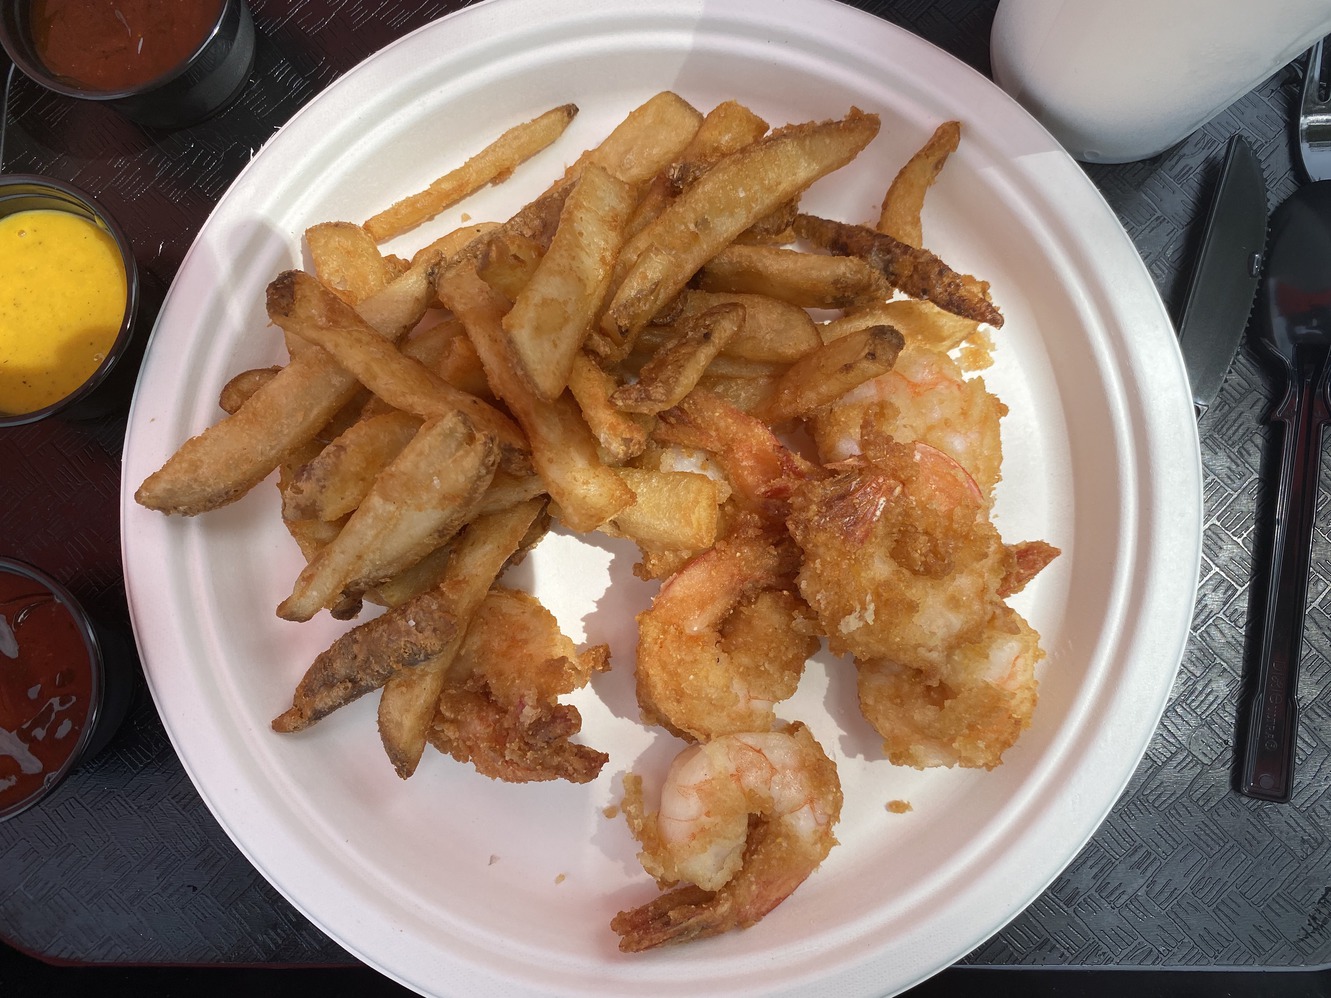 Fried shrimp and fries eaten near Breakers Bay.